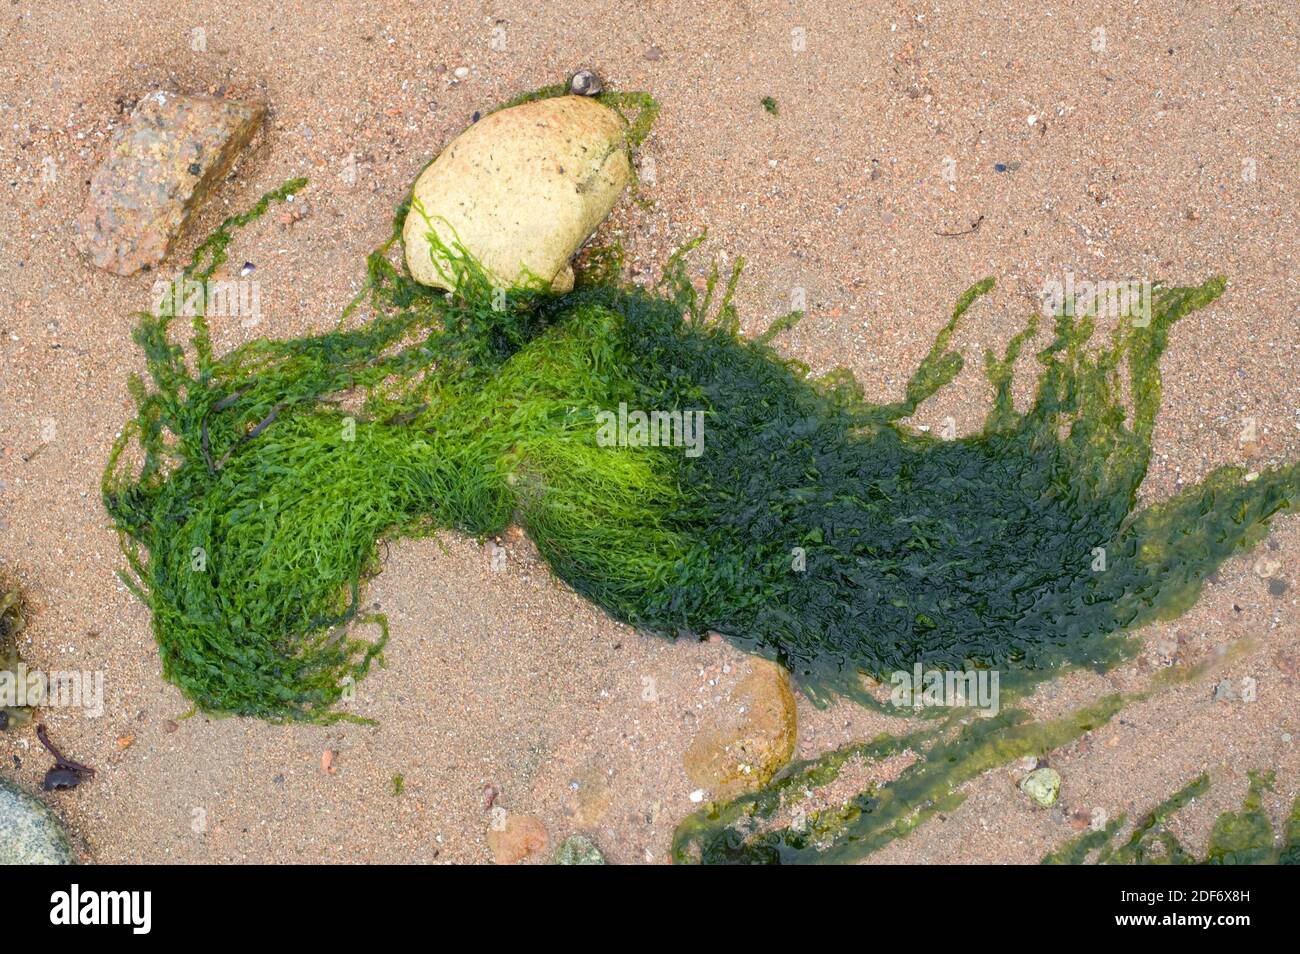 Enteromorpha intestinalis or Ulva intestinalis is a green alga. Stock Photo